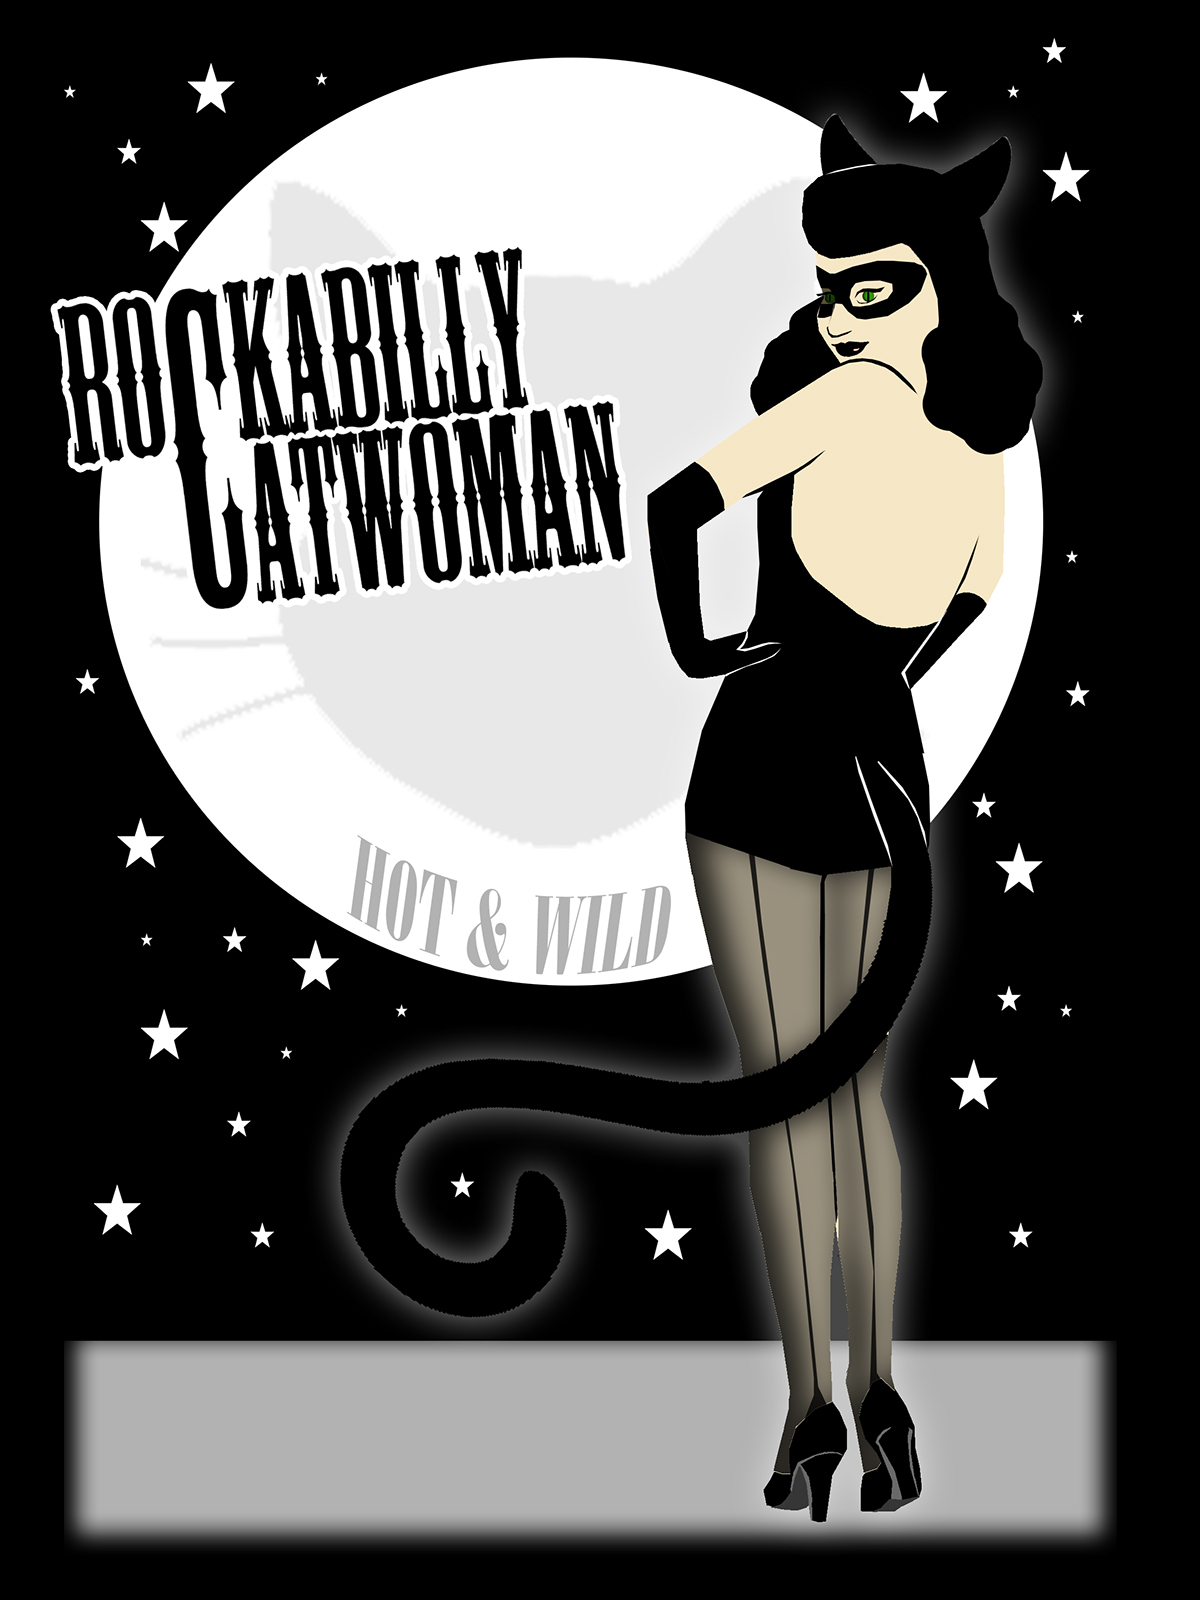 Rockabilly catwoman owl devil evil girl pin up digital art kiwi Rocker hibisus